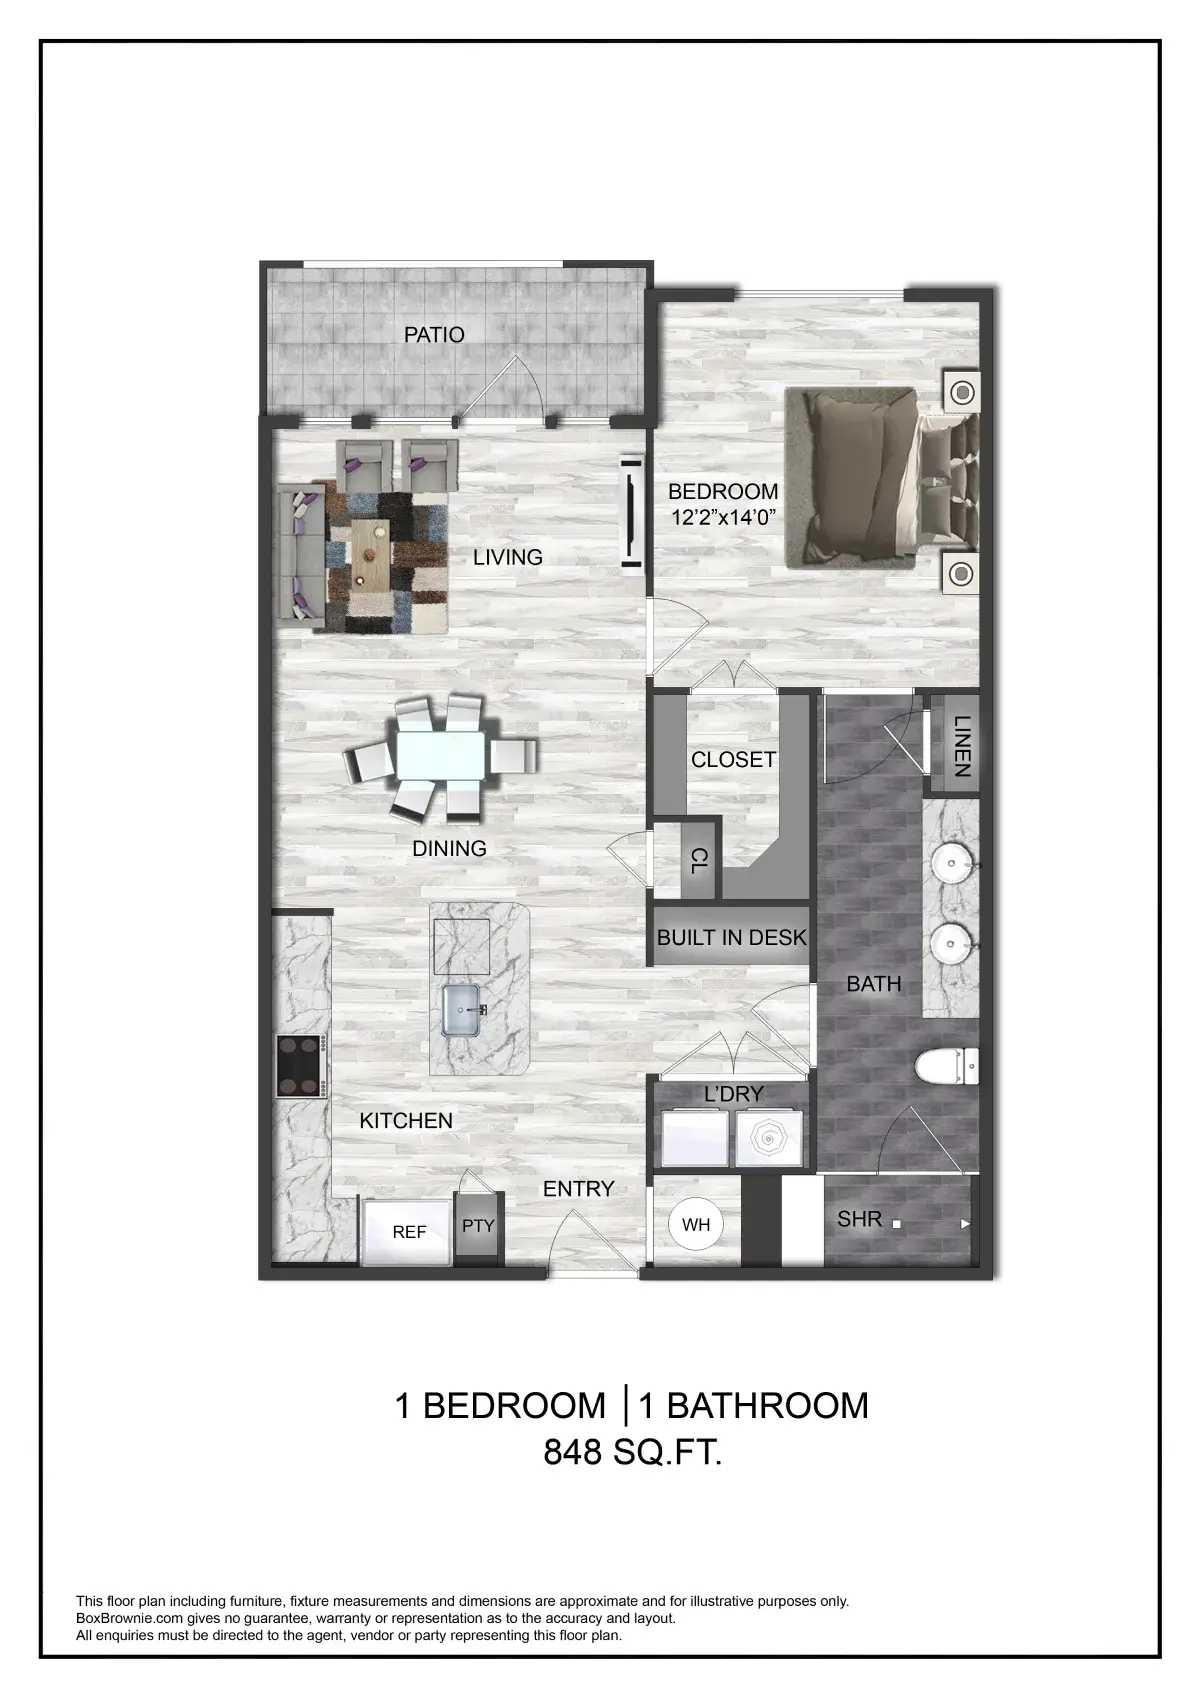 Sinclair houston apartment floorplan 4